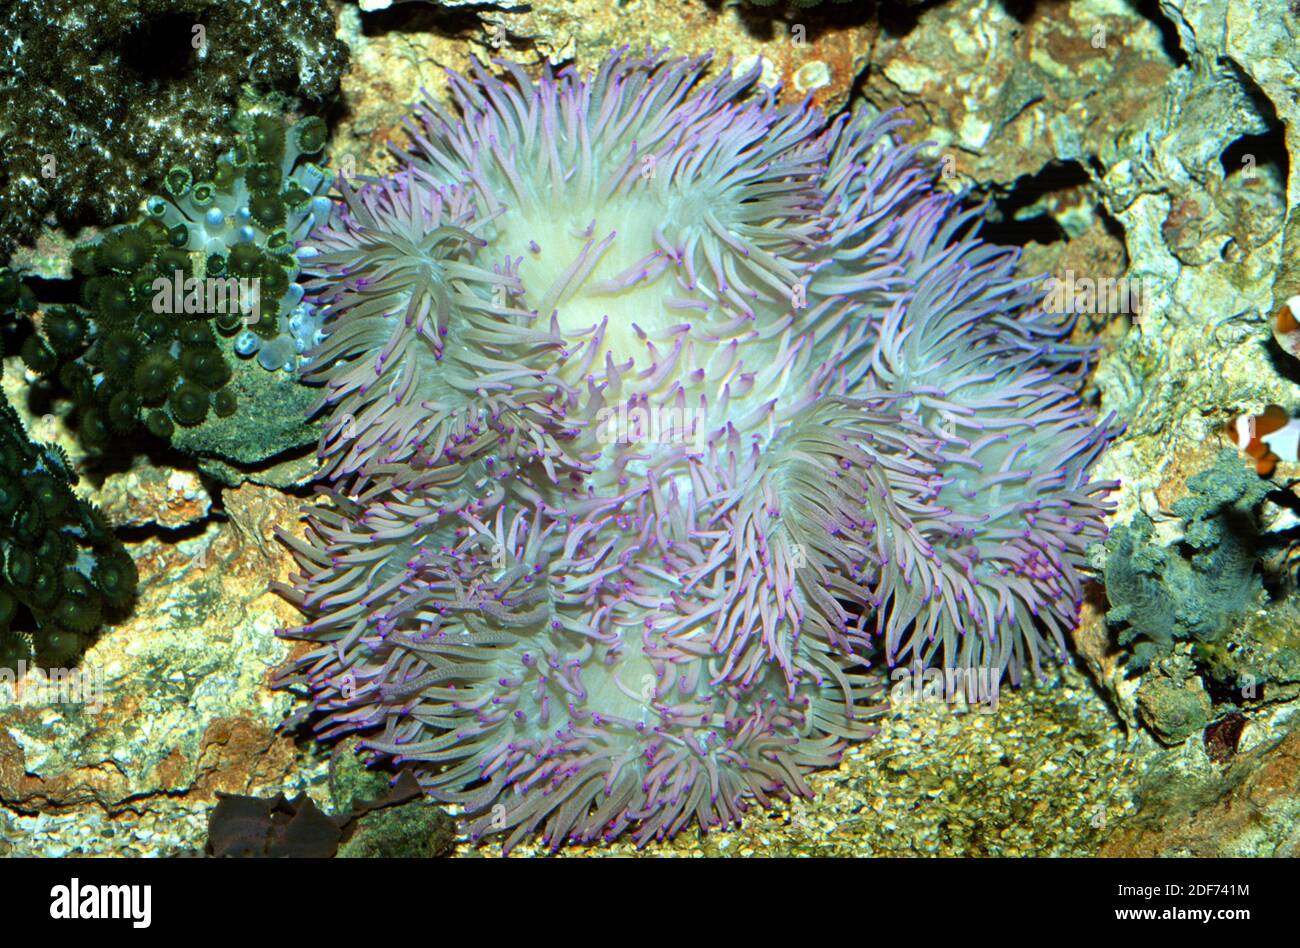 Giant carpet anemone (Stichodactyla gigantea) is a soft coral. Stock Photo